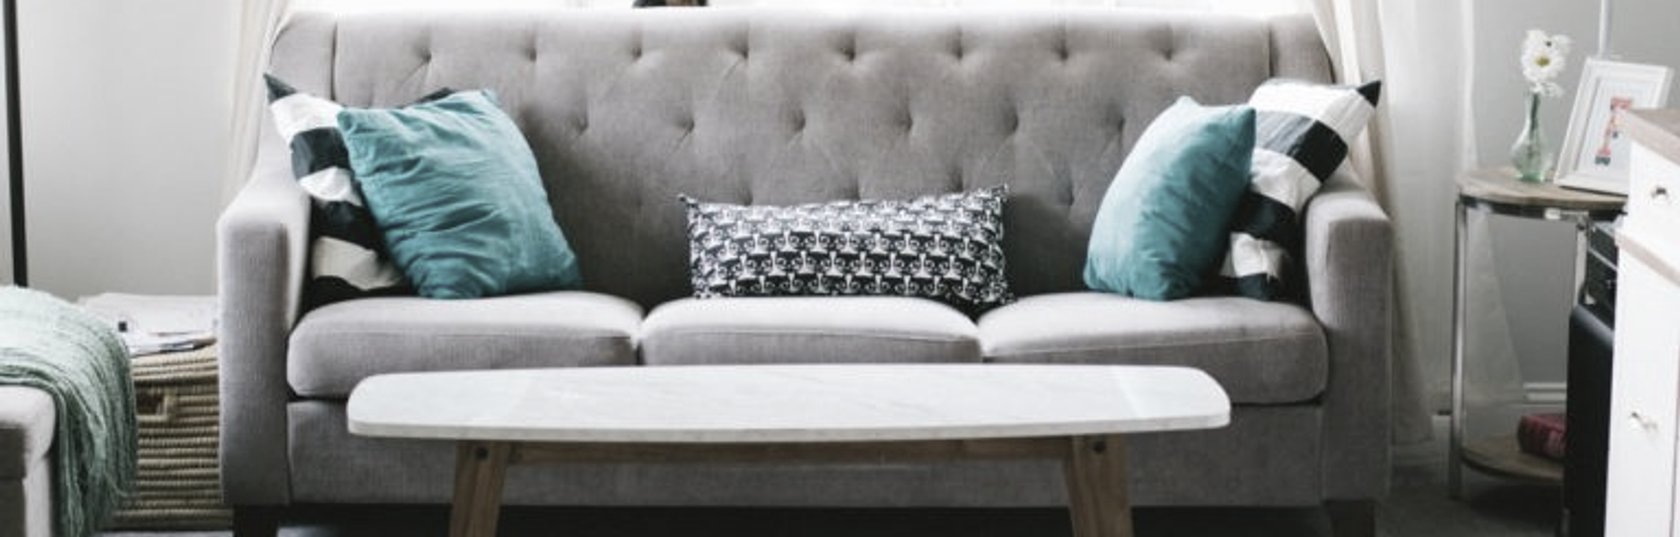 Choosing The Right Sofa